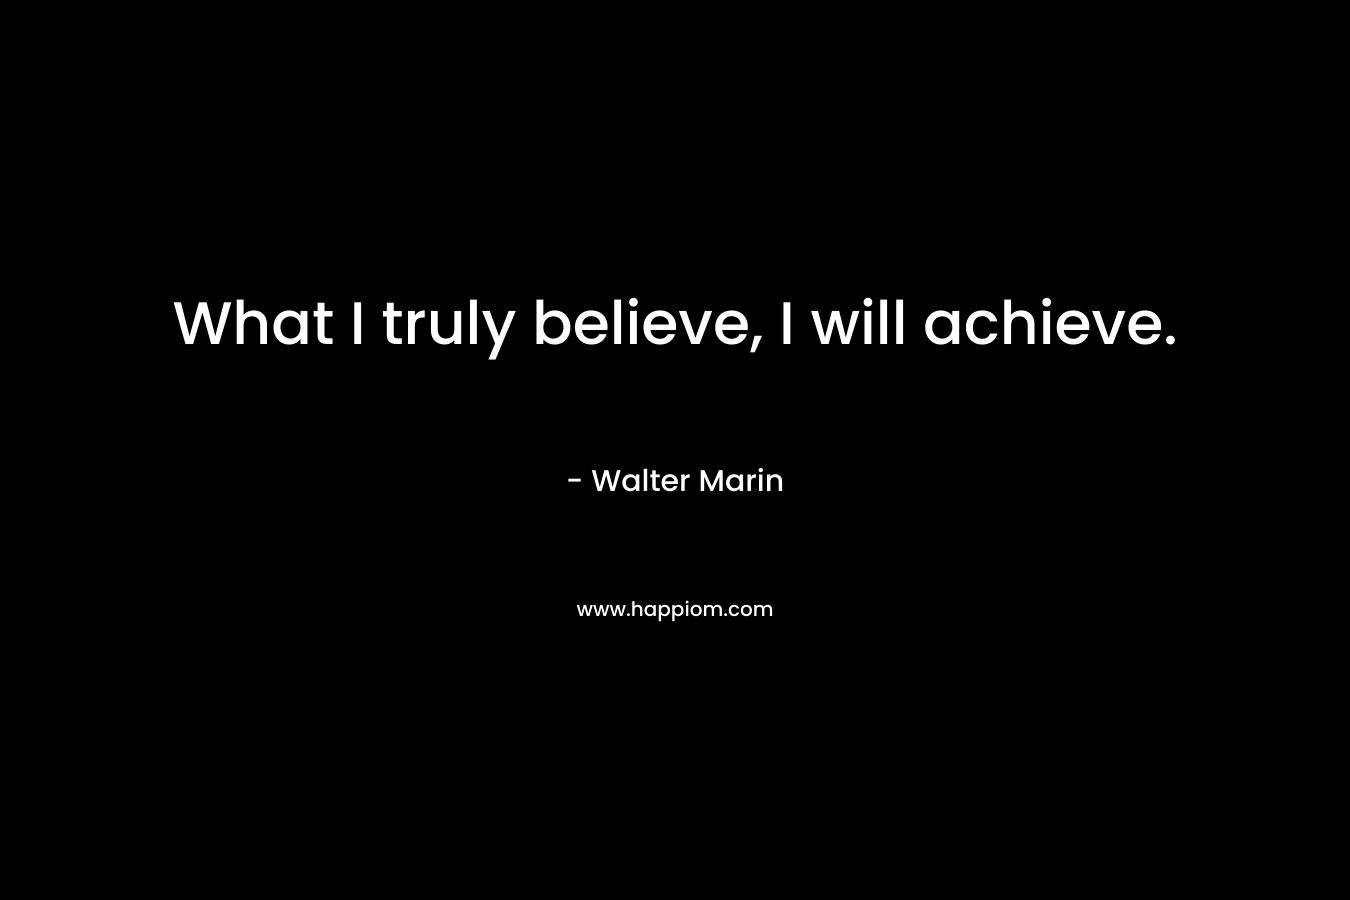 What I truly believe, I will achieve.